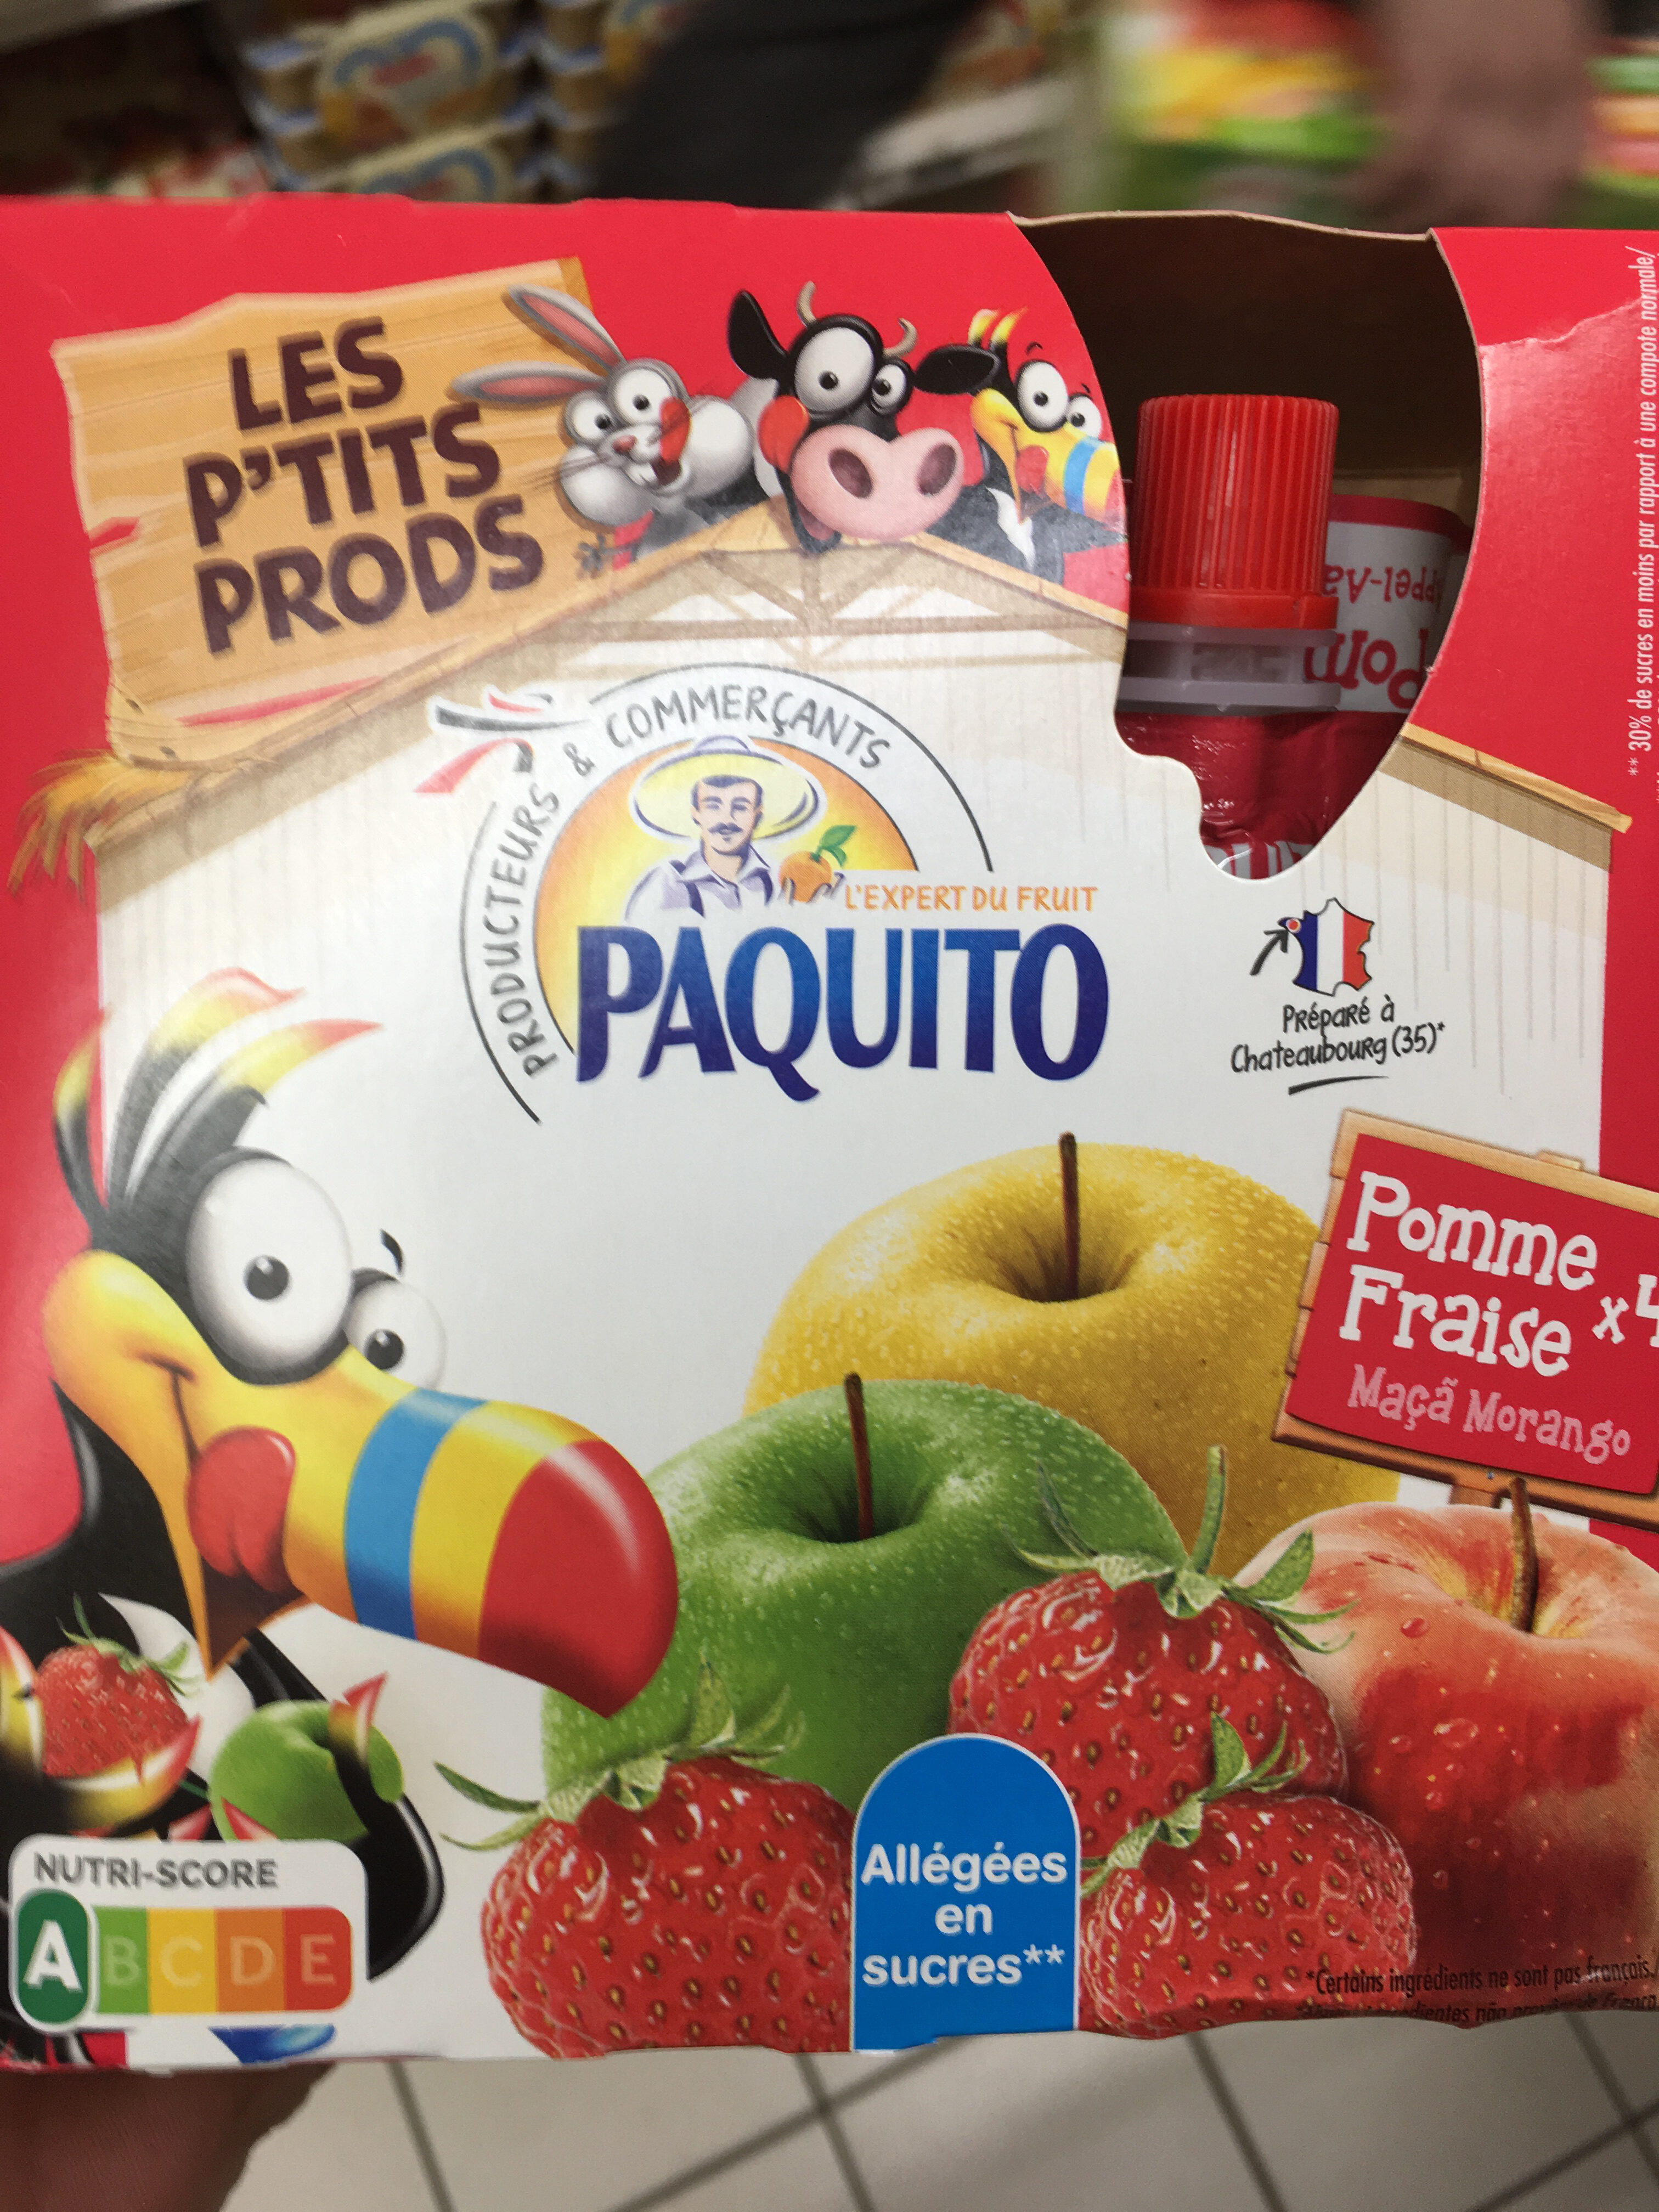 Pocket pomme fraise - Product - fr